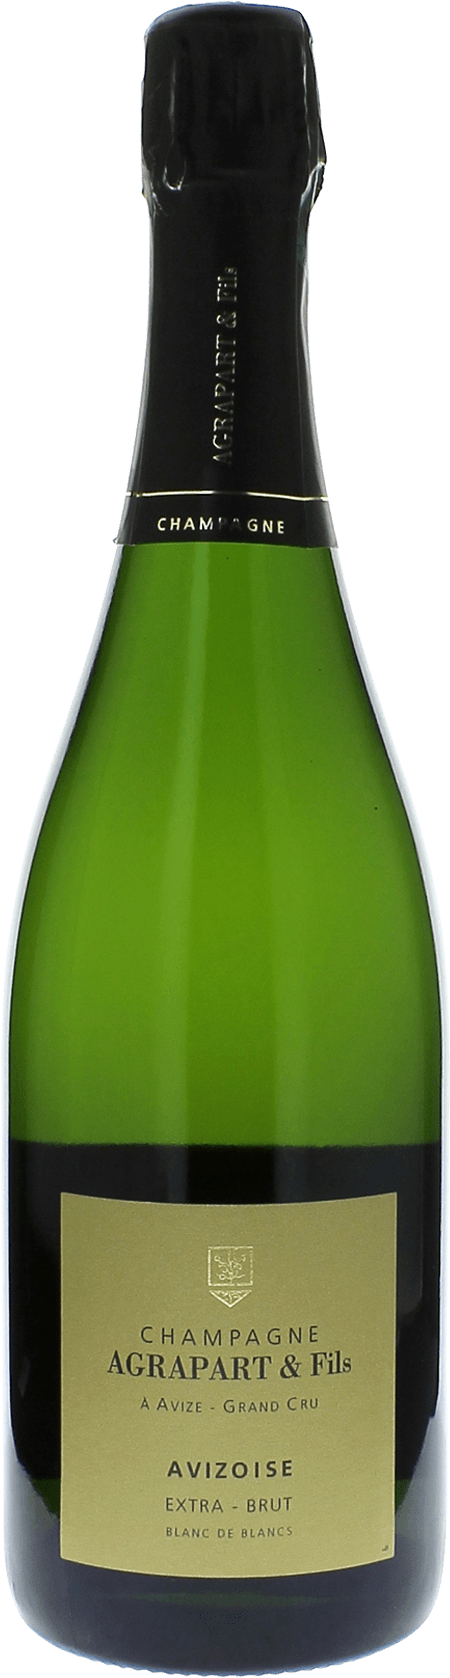 Agrapart  avizoise extra brut blanc de blancs grand cru 2017  Pascal Agrapart, Champagne